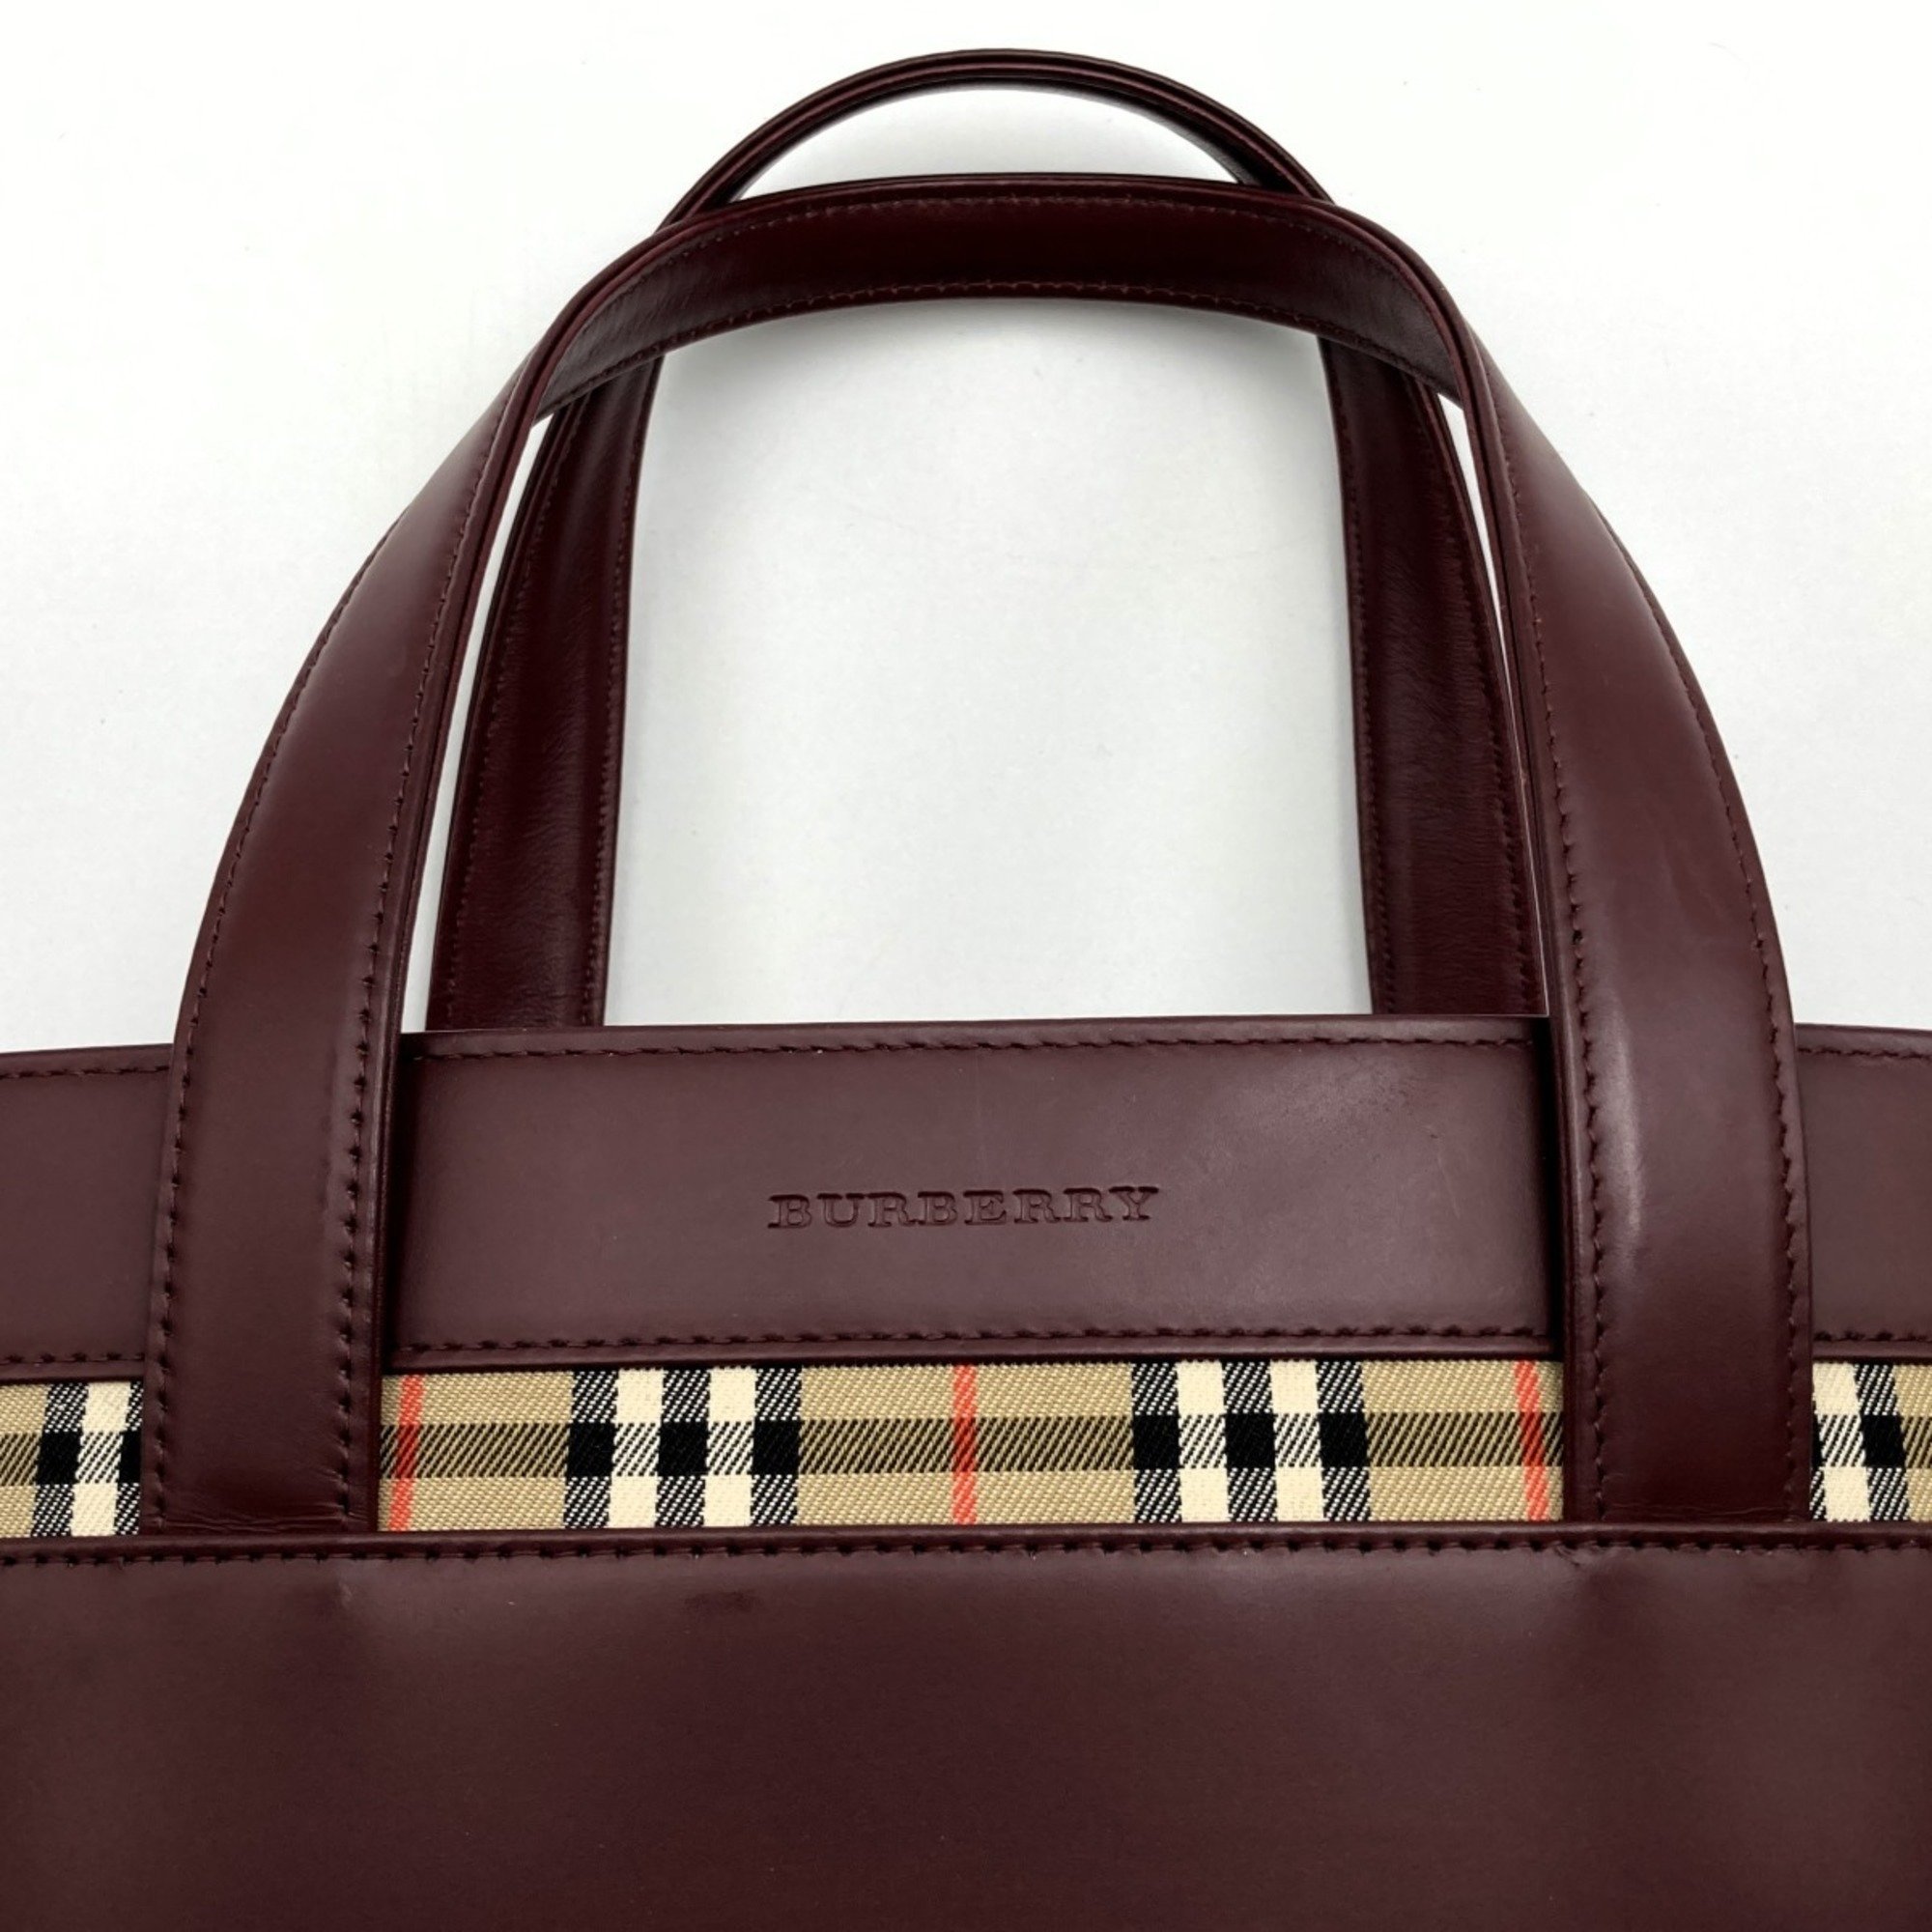 BURBERRY Burberry Handbag Tote Bag Formal Nova Check Bordeaux Red Leather Ladies Fashion USED